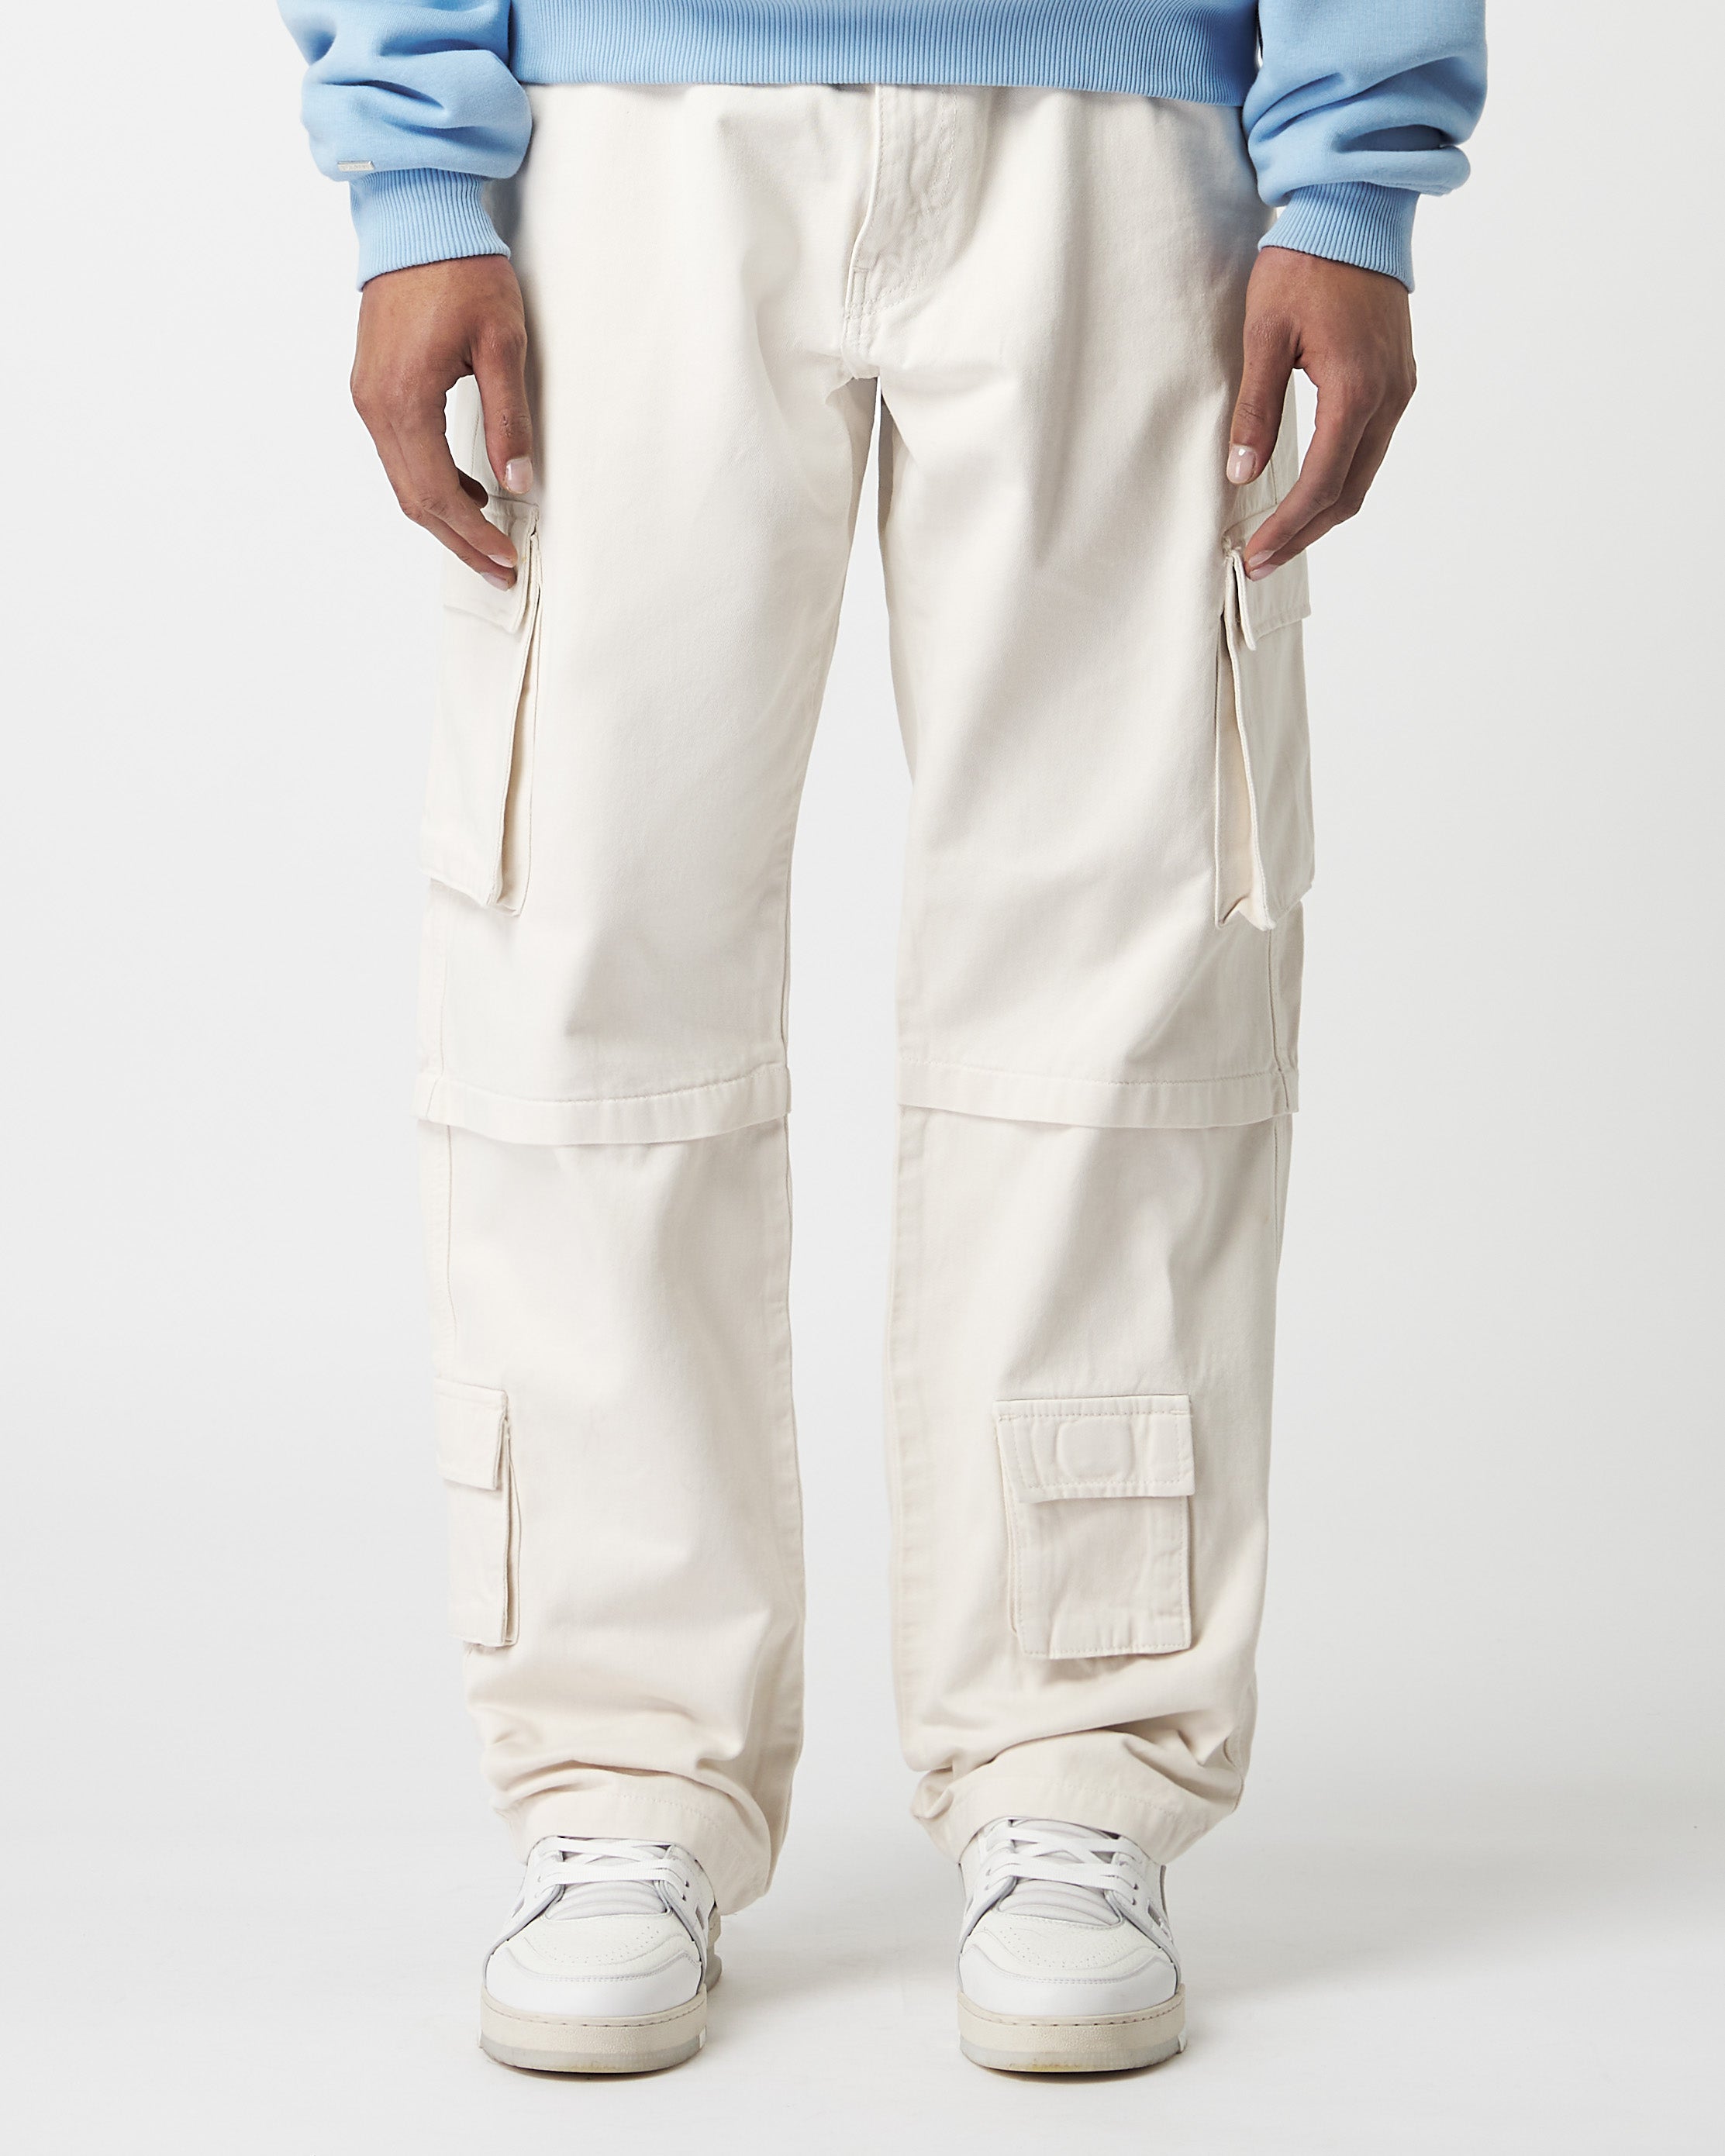 EIGHTYFIVE BAGGY PANTS - Cargo trousers - off white/off-white - Zalando